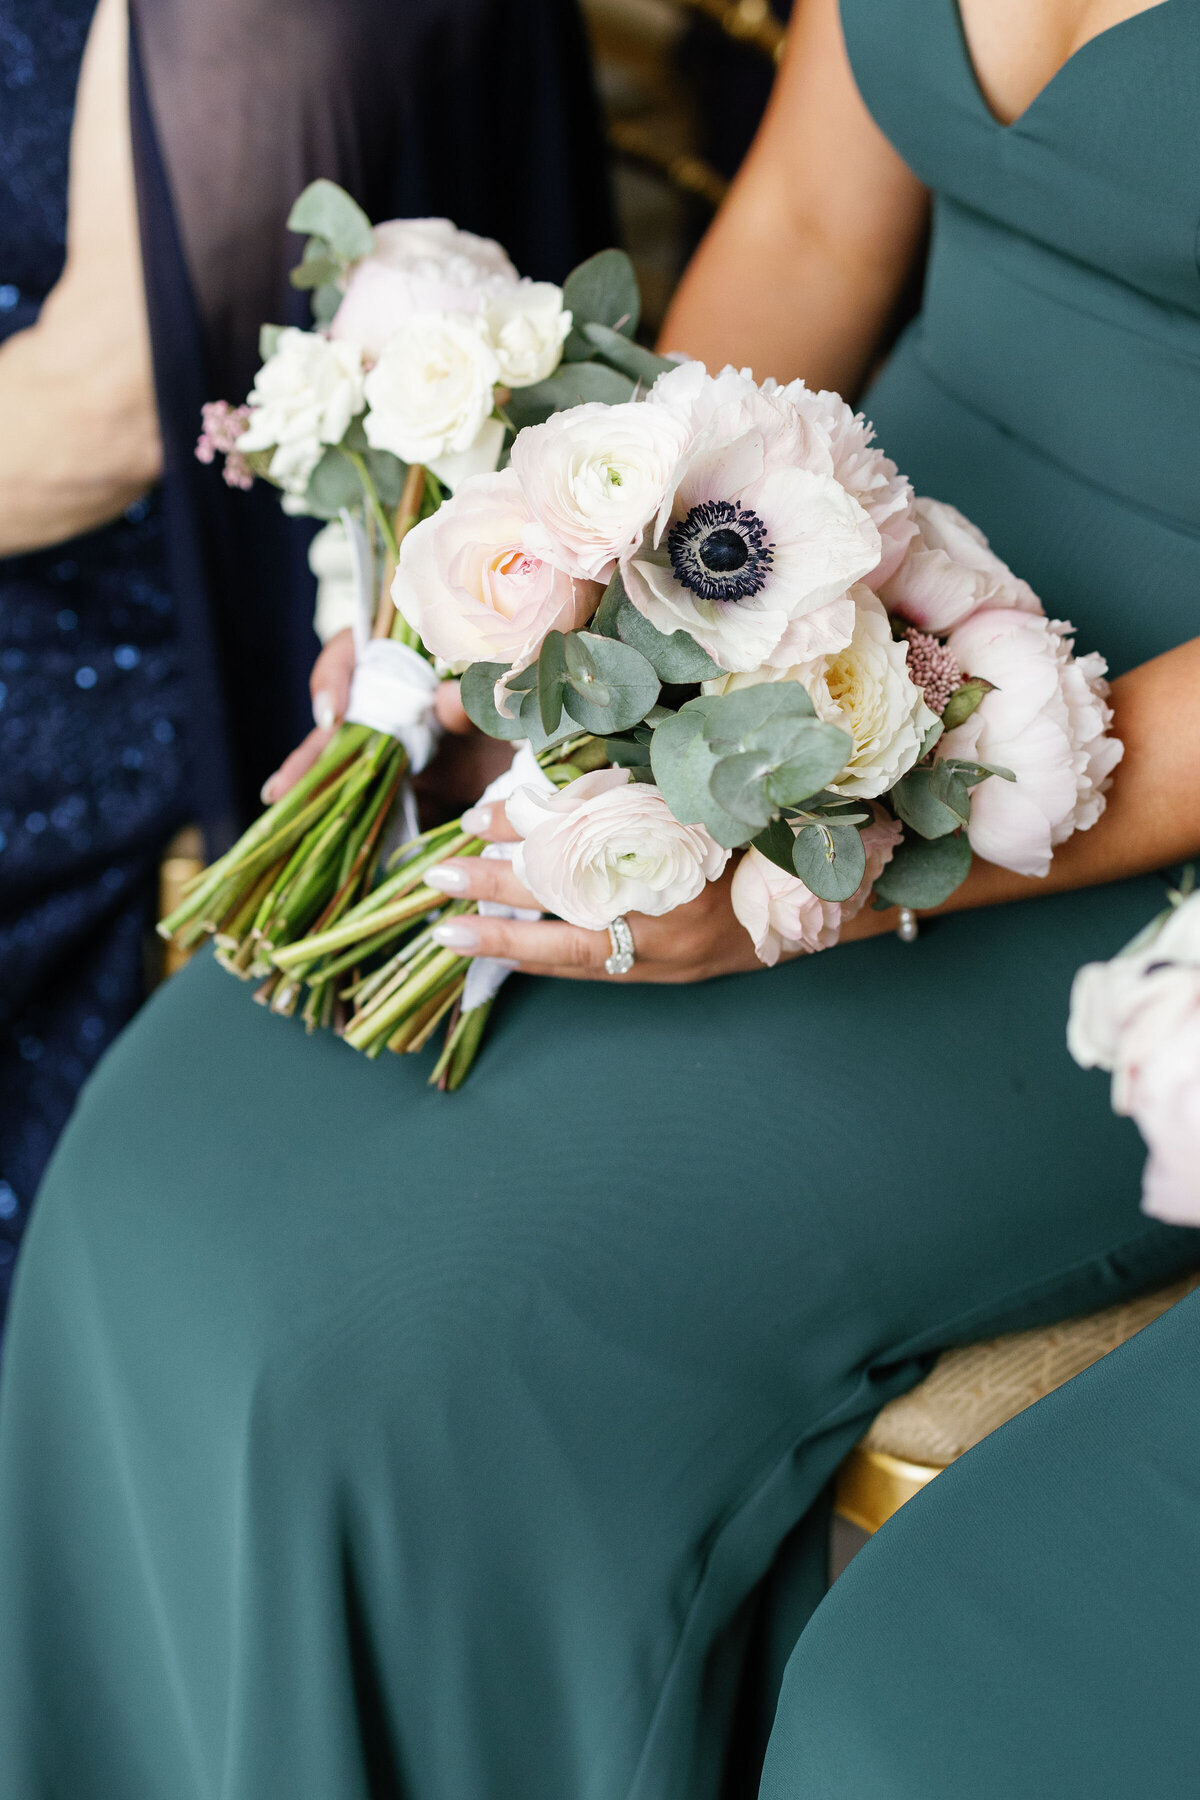 emerald-bridesmaids-dresses-bouquet-inspiration-flowers-white-blush-green-wedding-enza-events